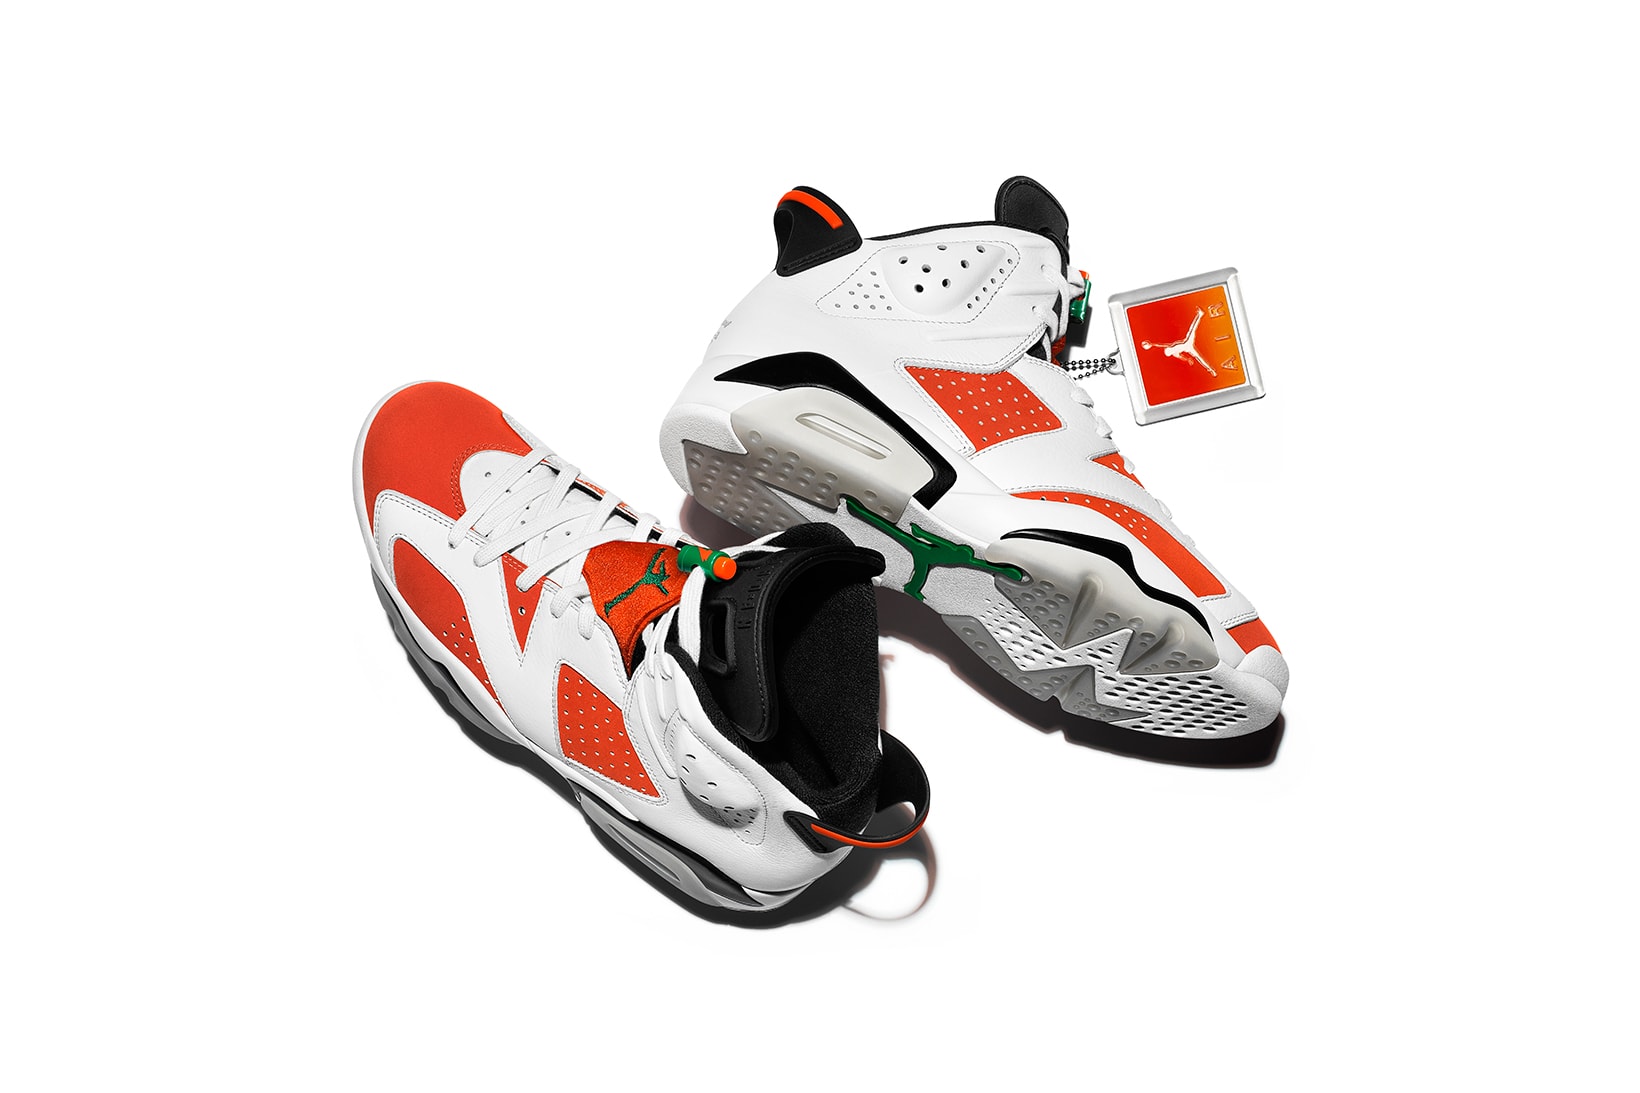 Jordan Brand Be Like Mike Gatorade Collection Air Jordan 6 Air Jordan 32 Low Michael Jordan Footwear Release Date Info Drops December 16 2017